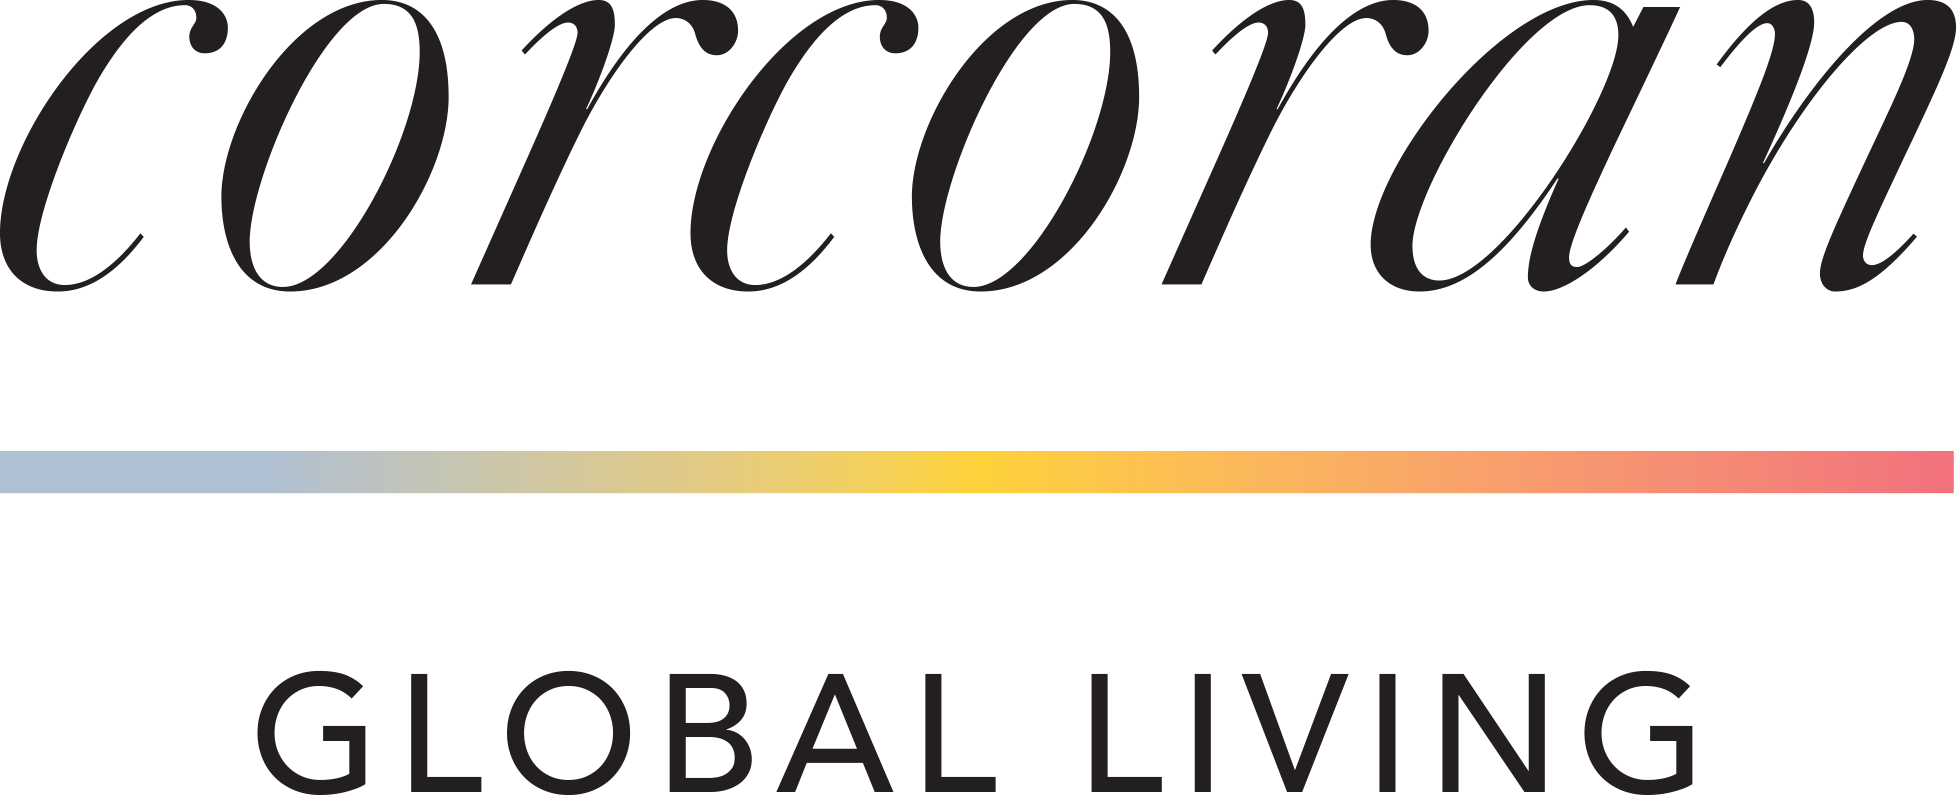 Logo_CorcoranGlobalLiving_ColorBar_Black